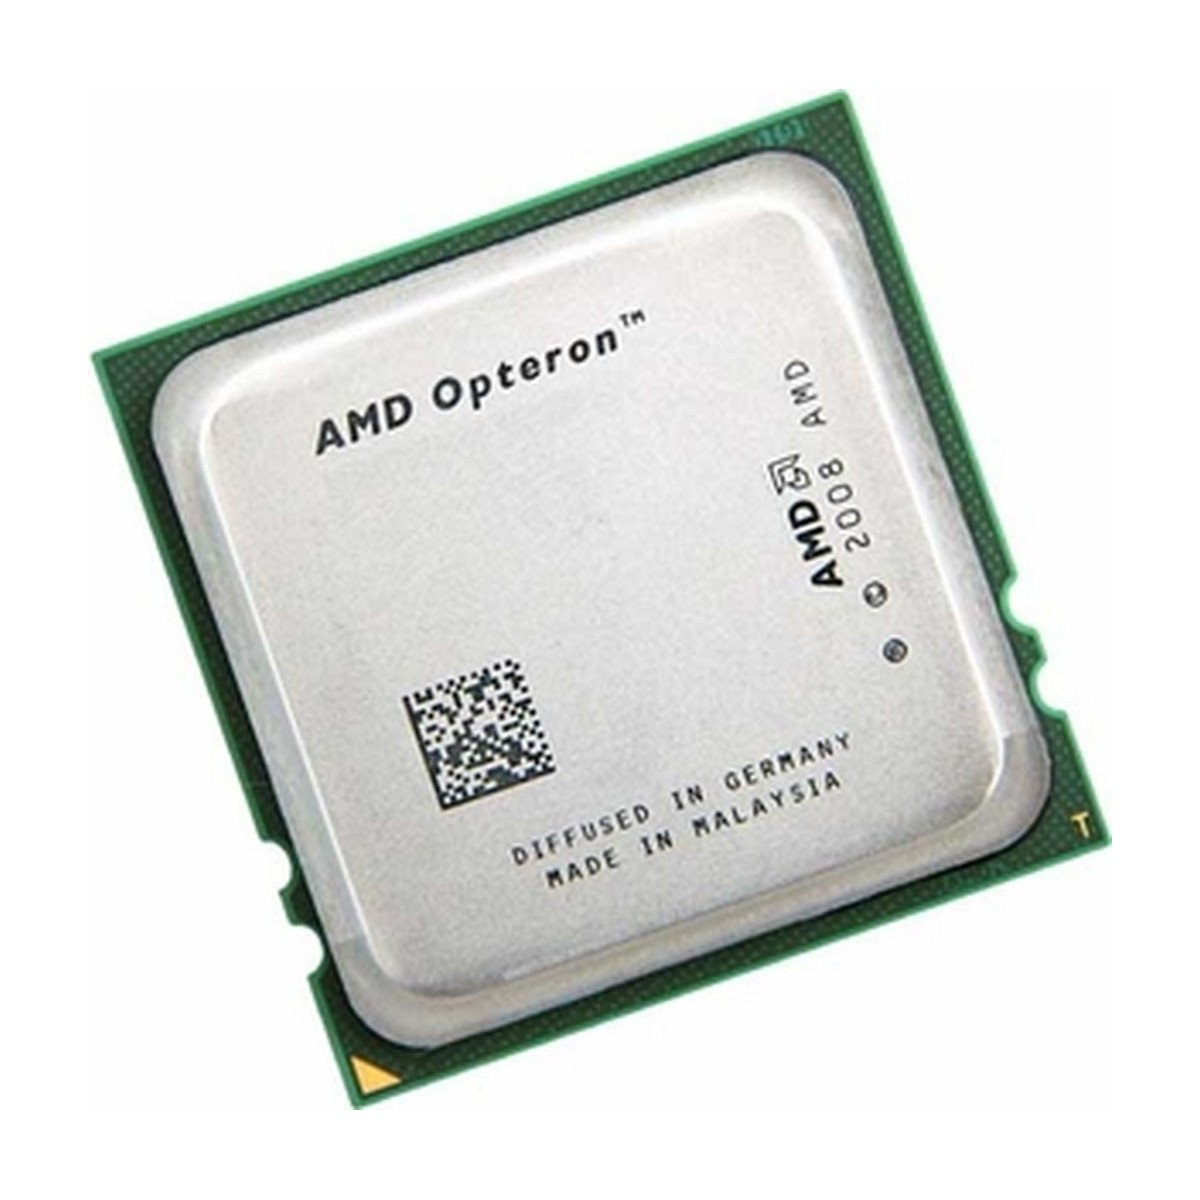 PROCESOR AMD OPTERON 2212 2.0 MHz 2 CORE